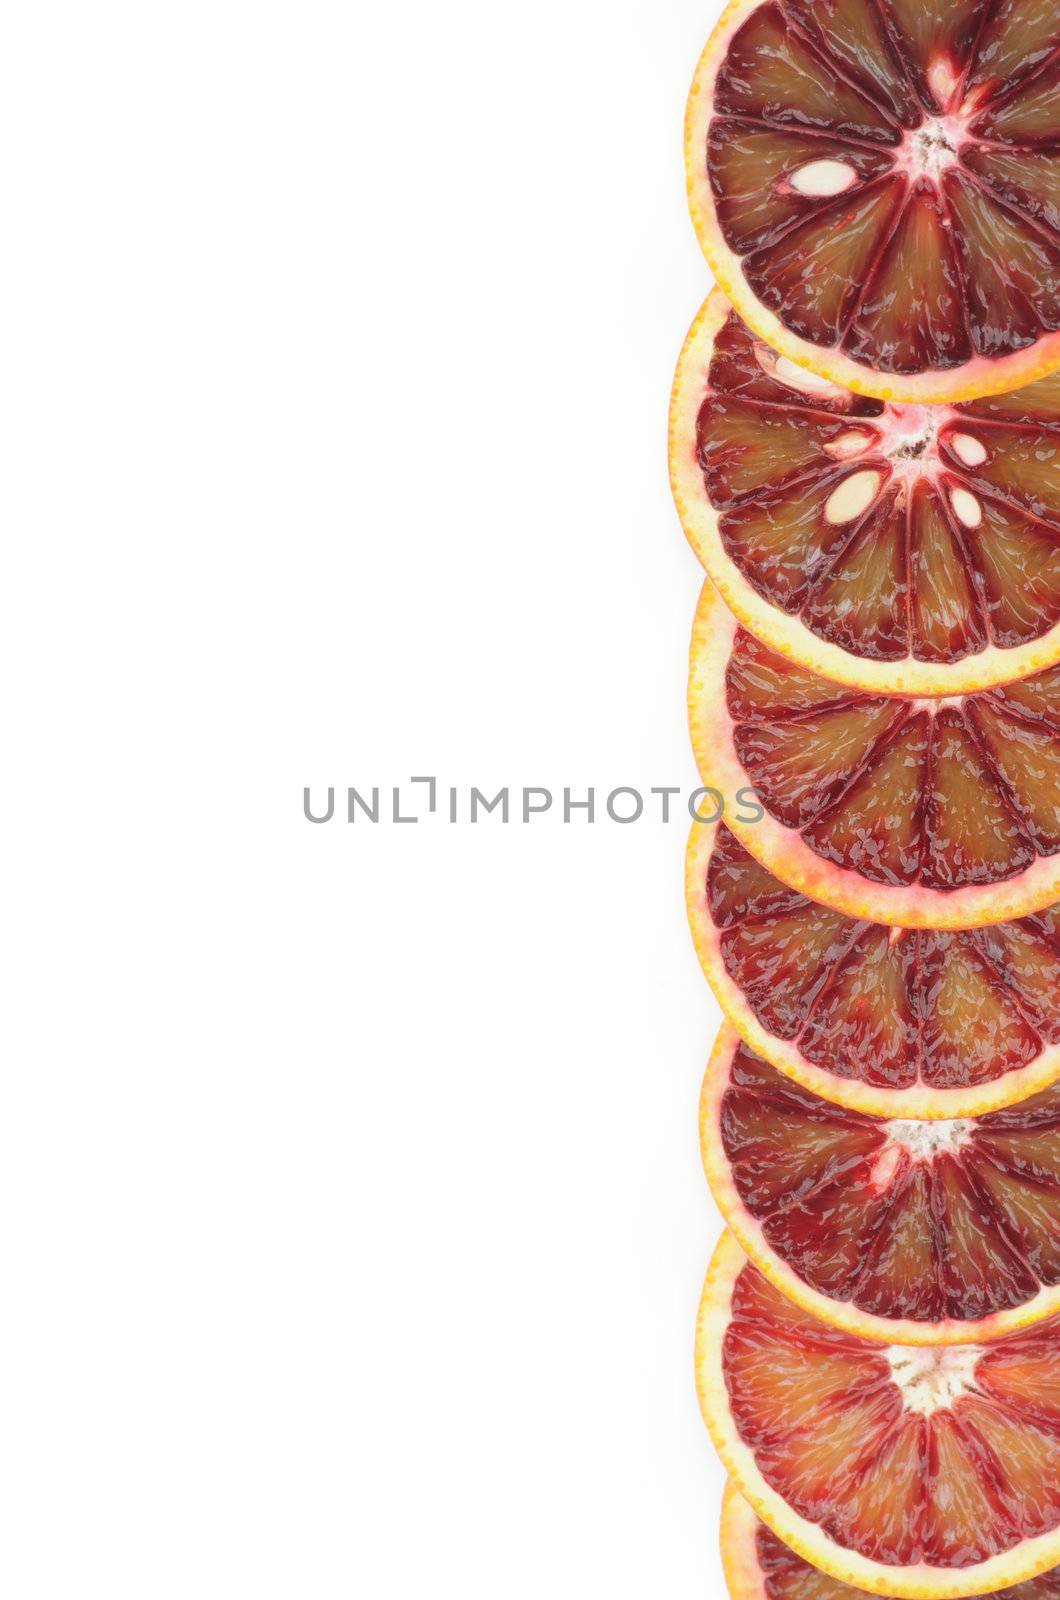 Frame of Blood Oranges by zhekos